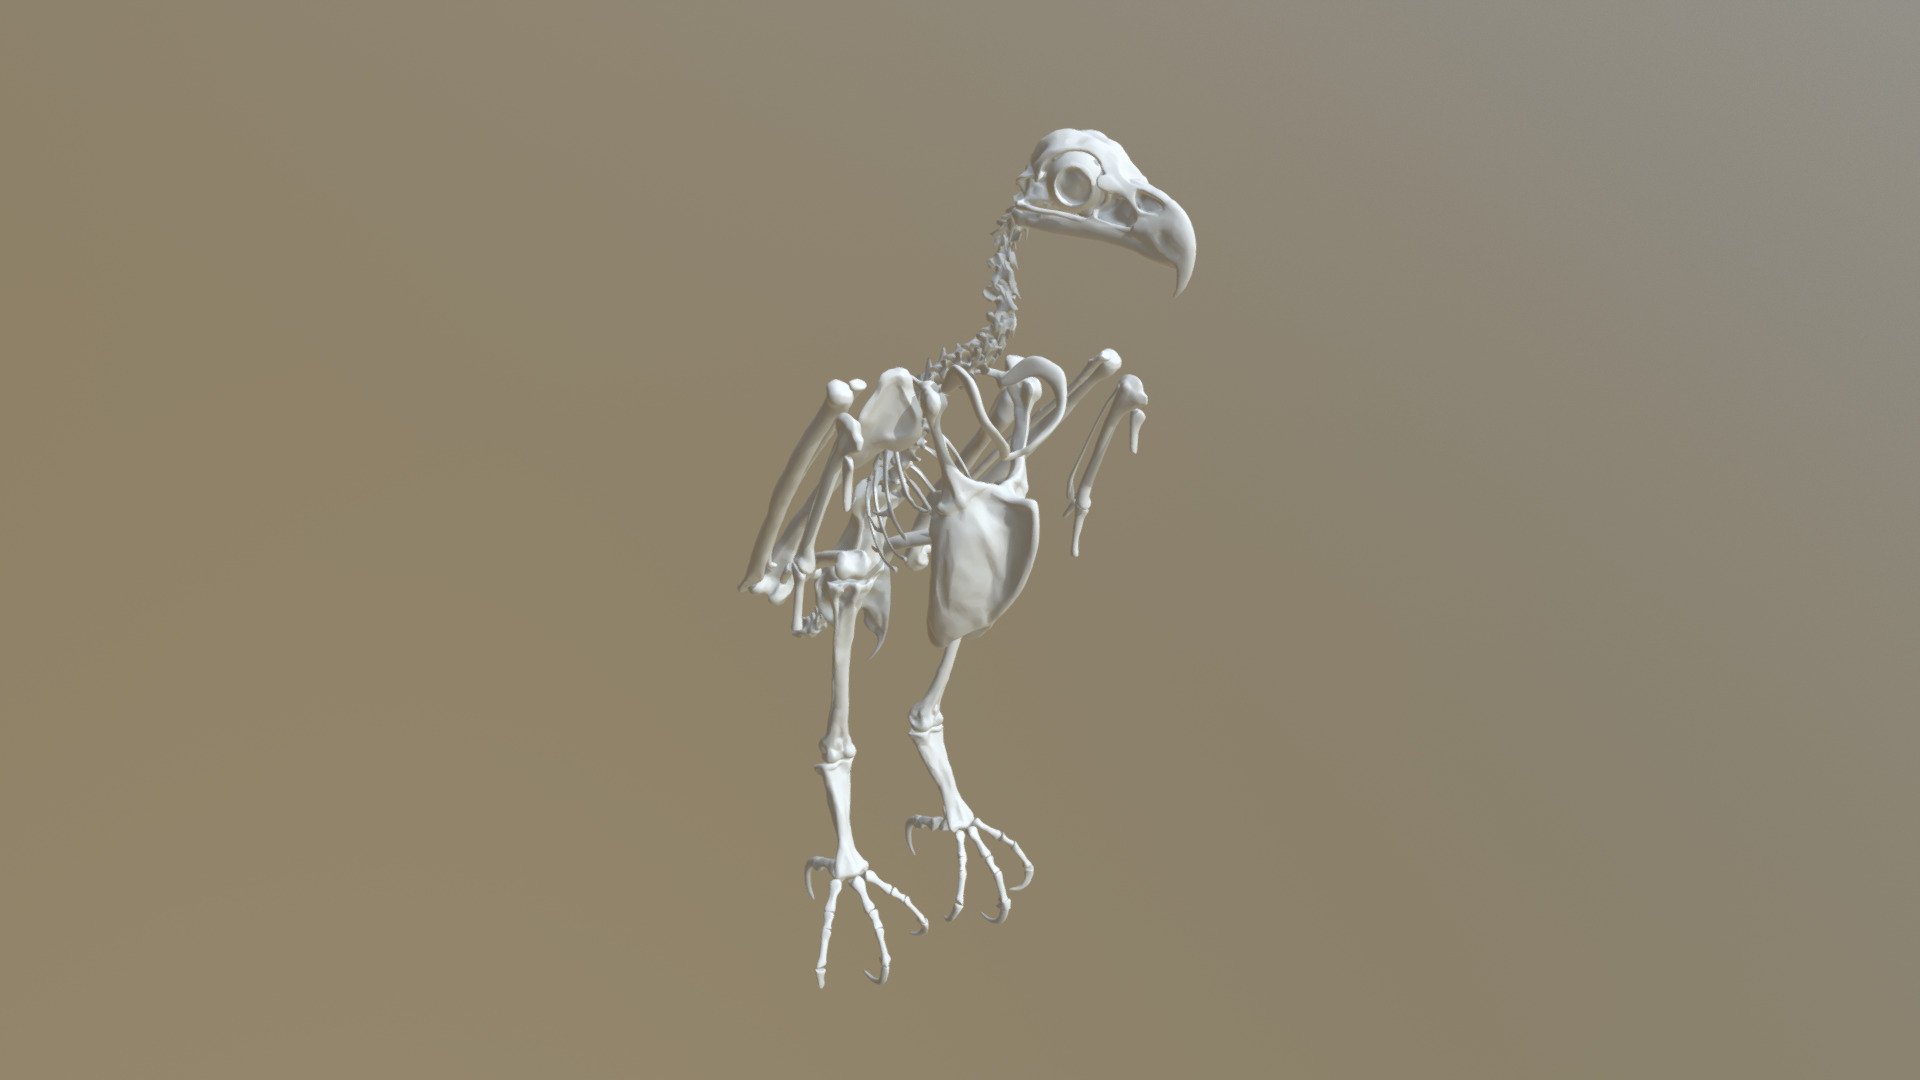 eagle leg anatomy